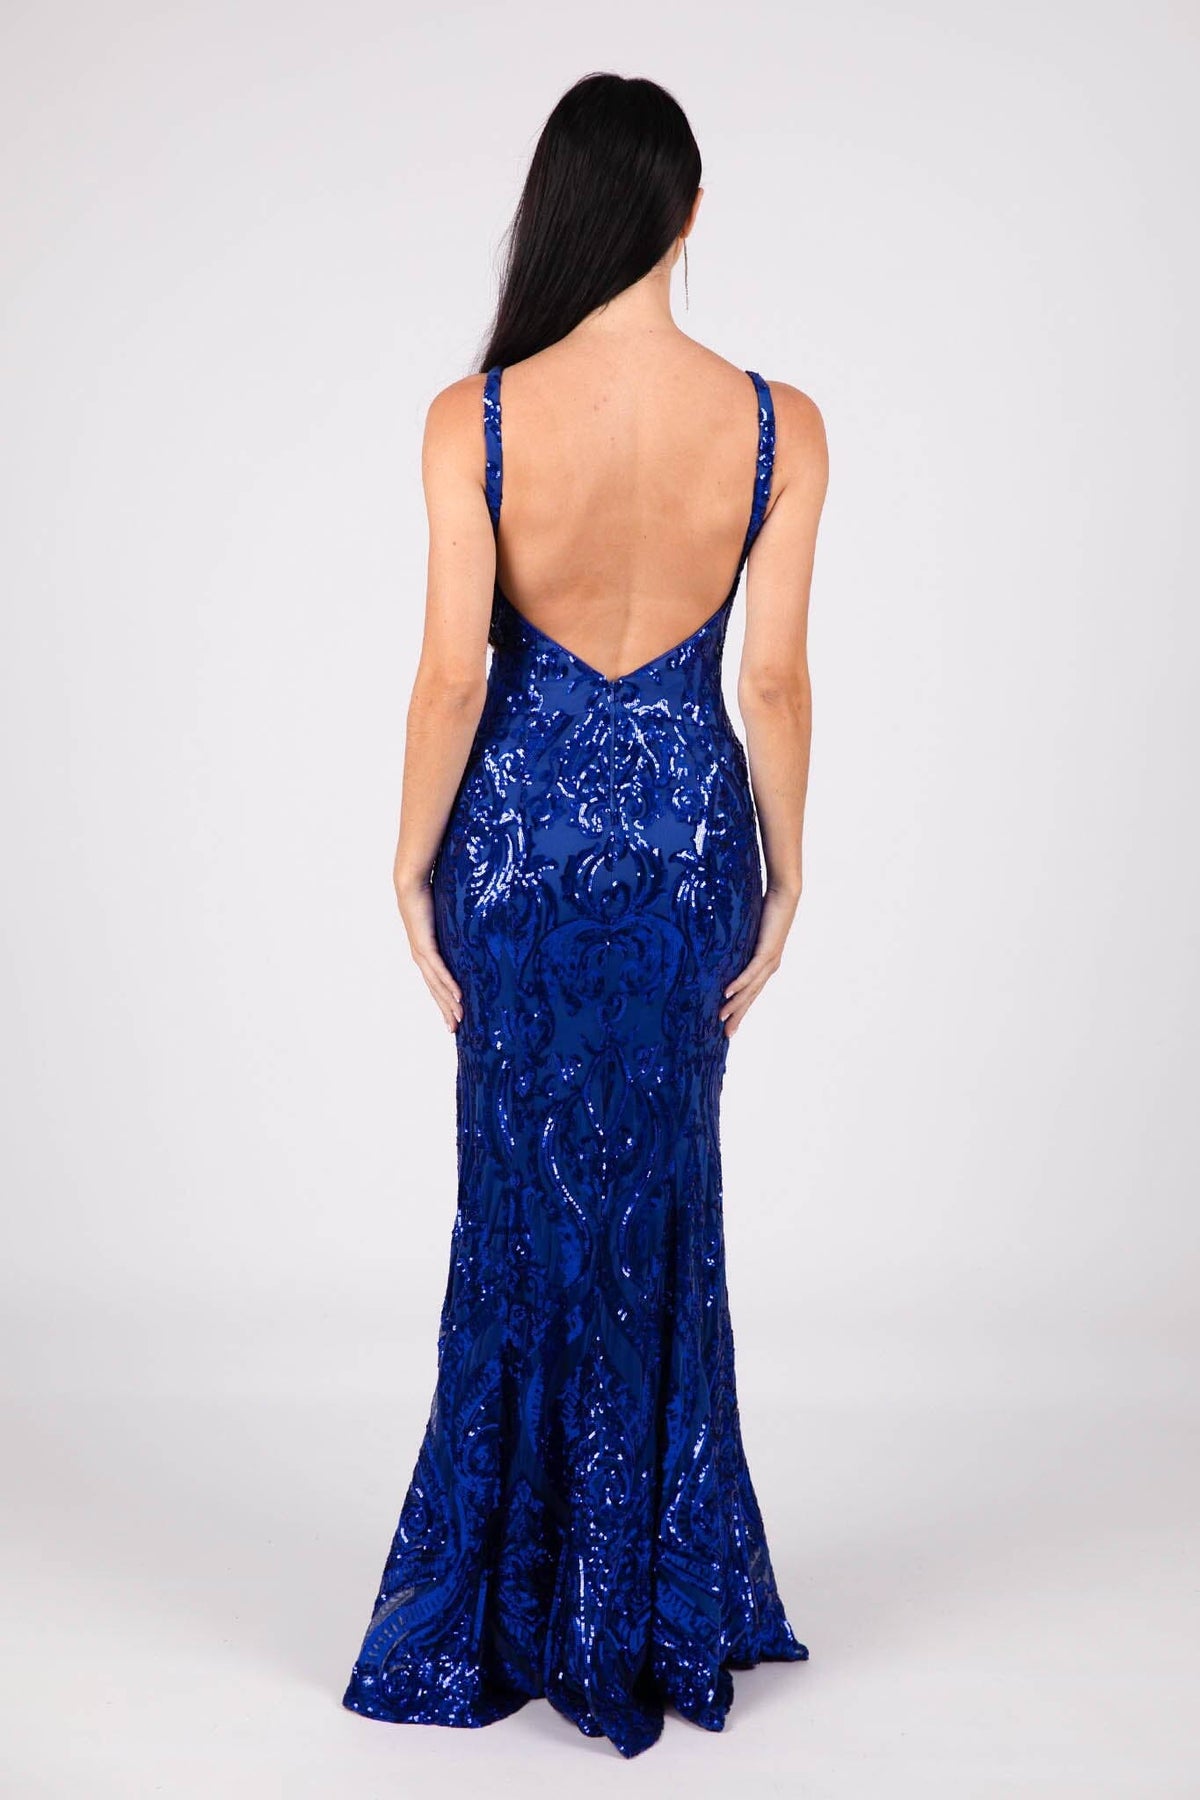 V Backless Design of Royal Blue Pattern Sequinned Floor Length Fitted Formal Gown with V Neckline